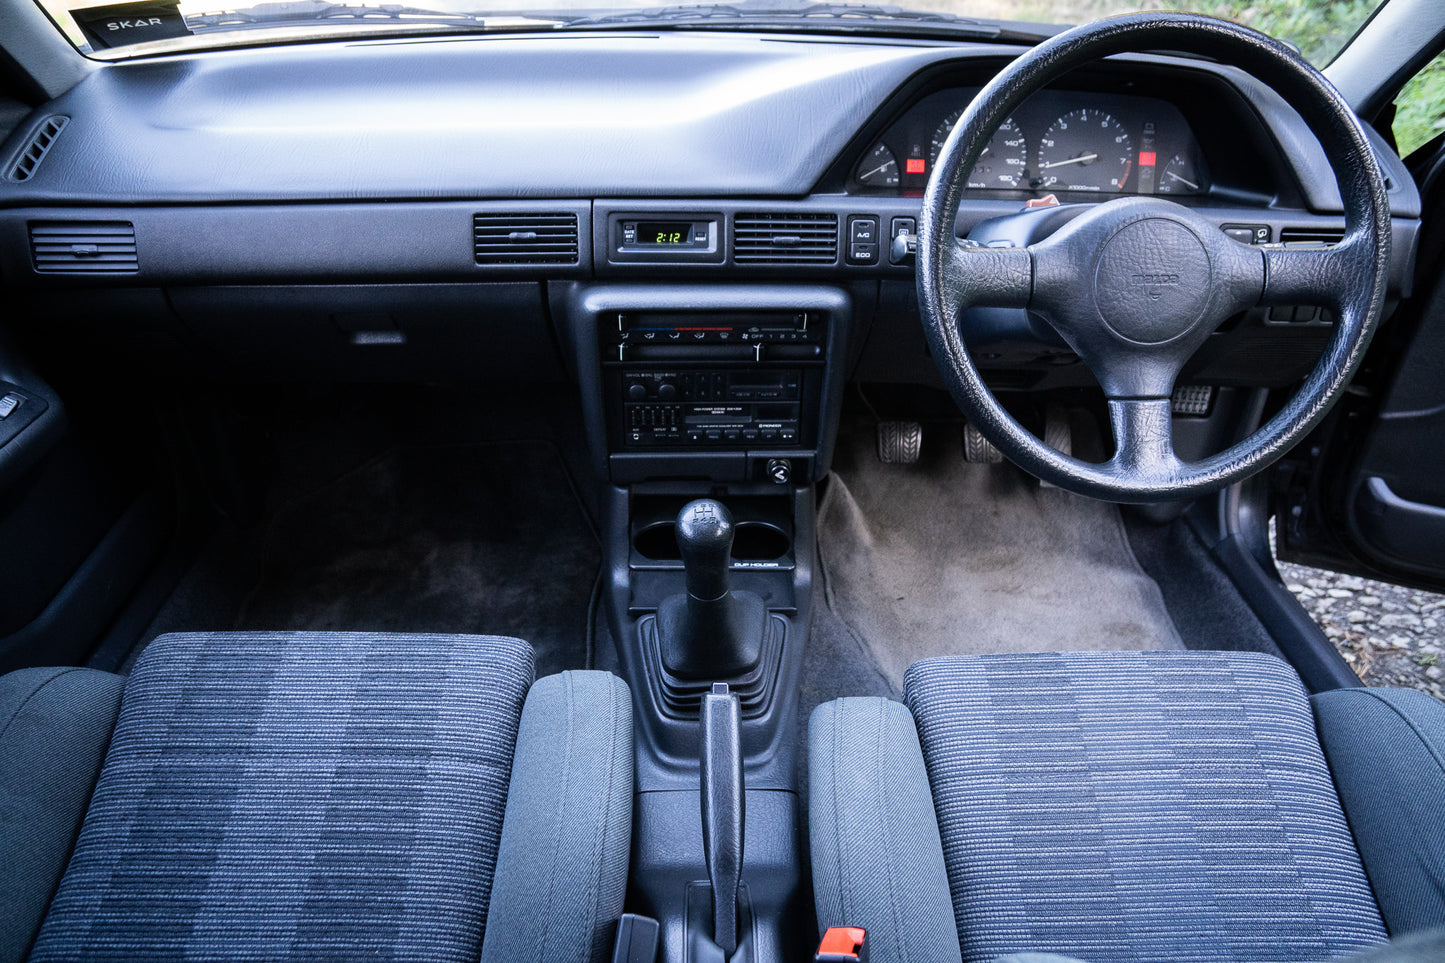 Mazda Familia GTX - 1990